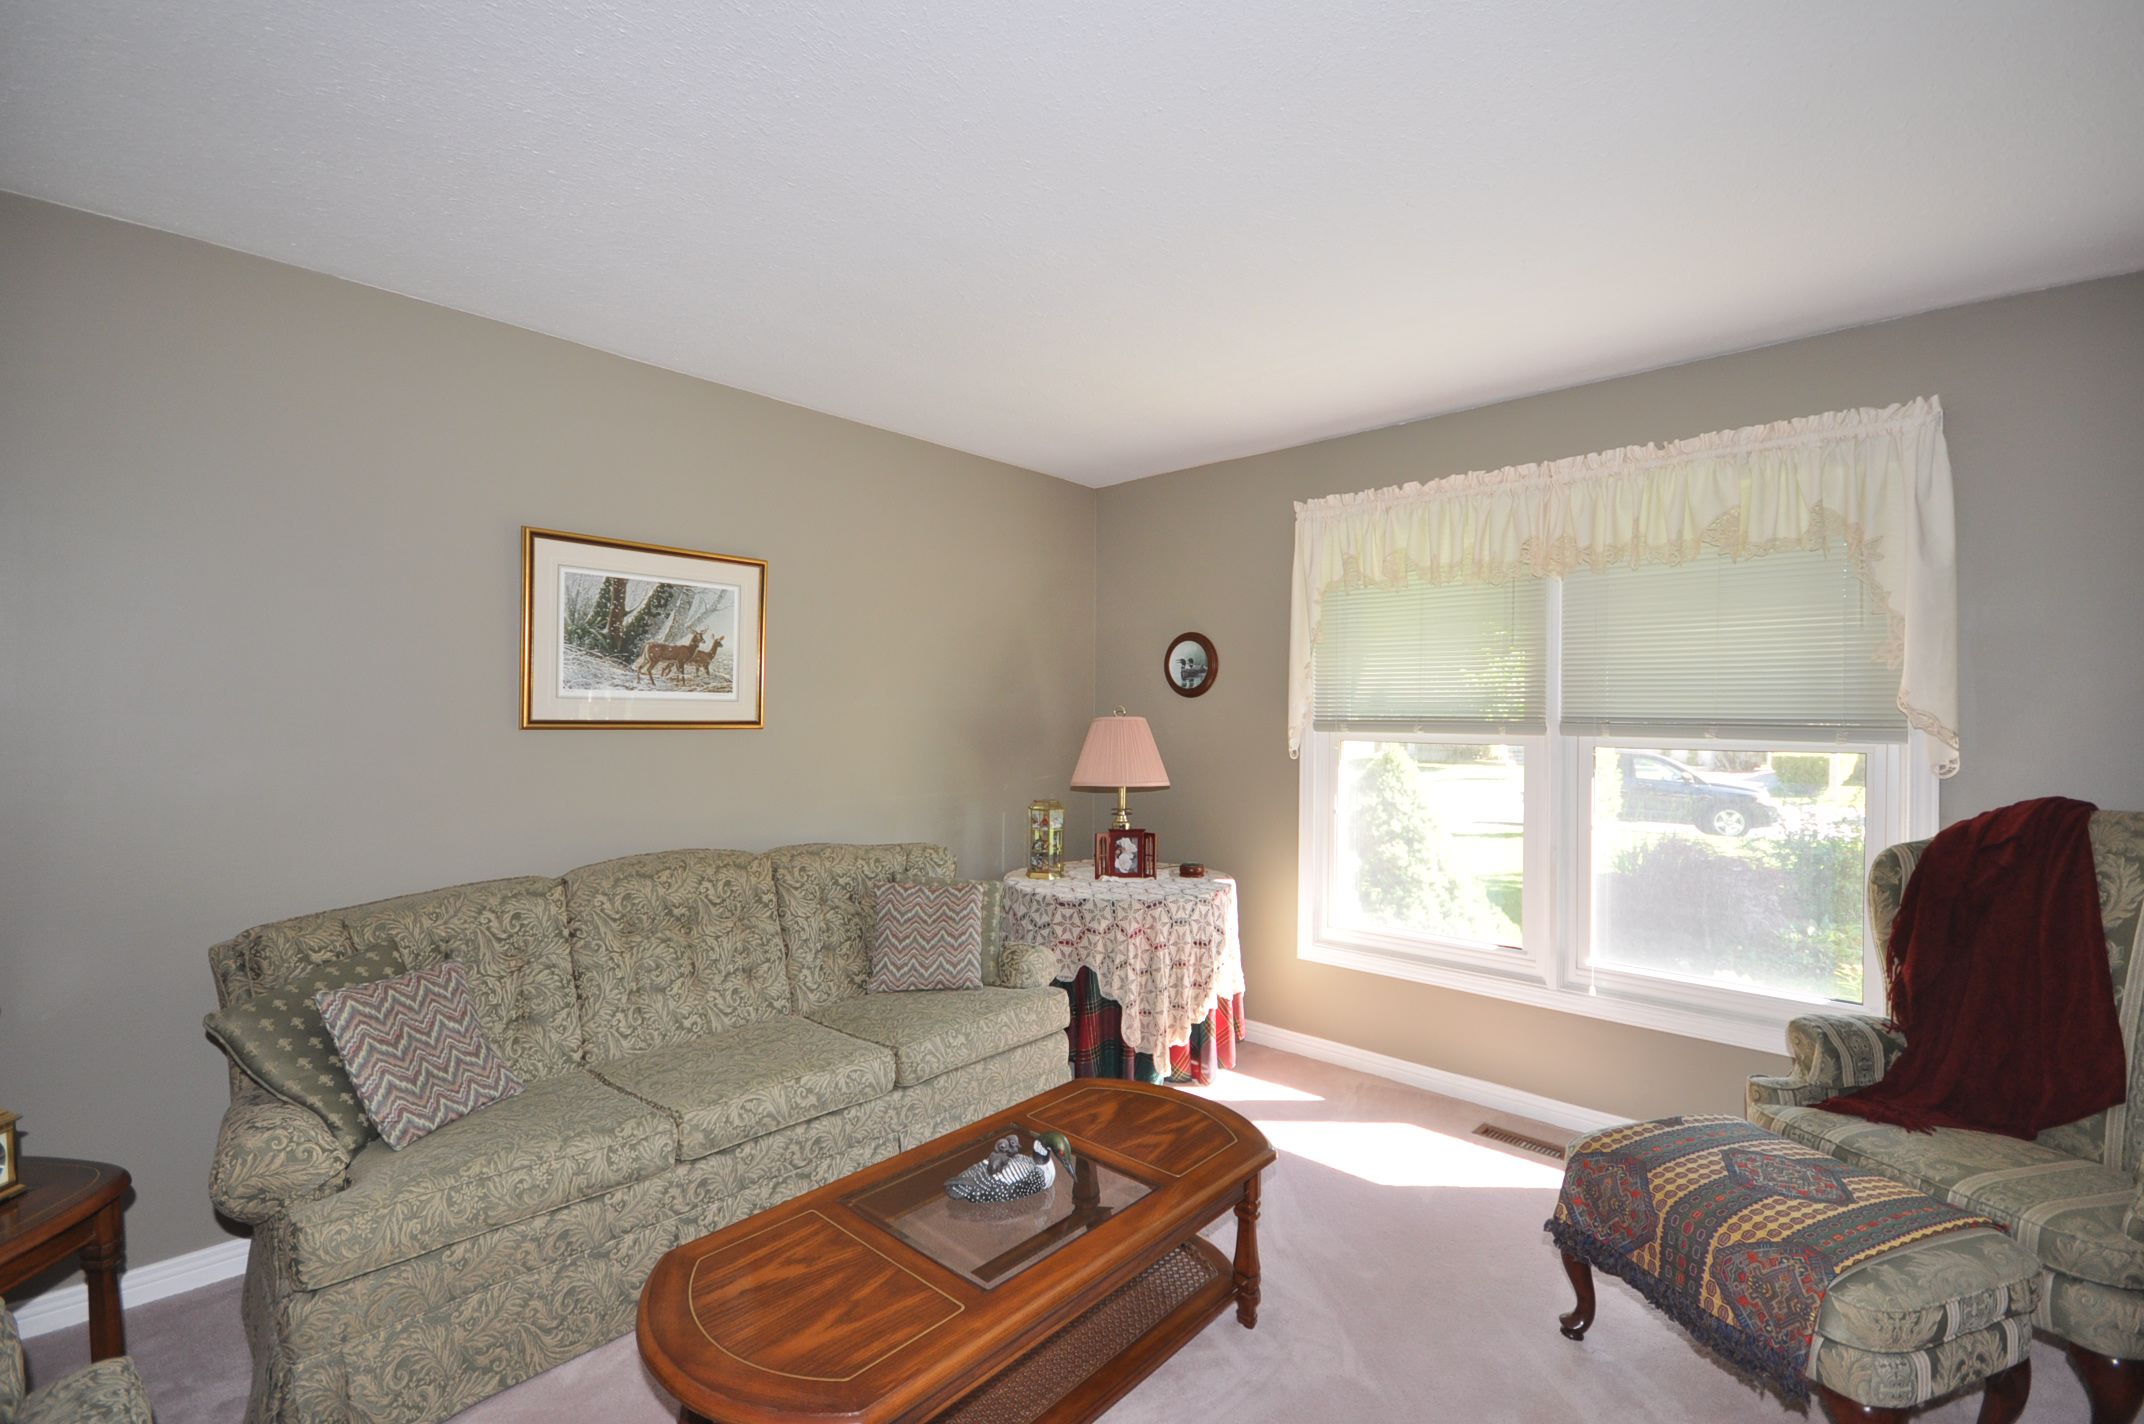 Living Room has large sunny window